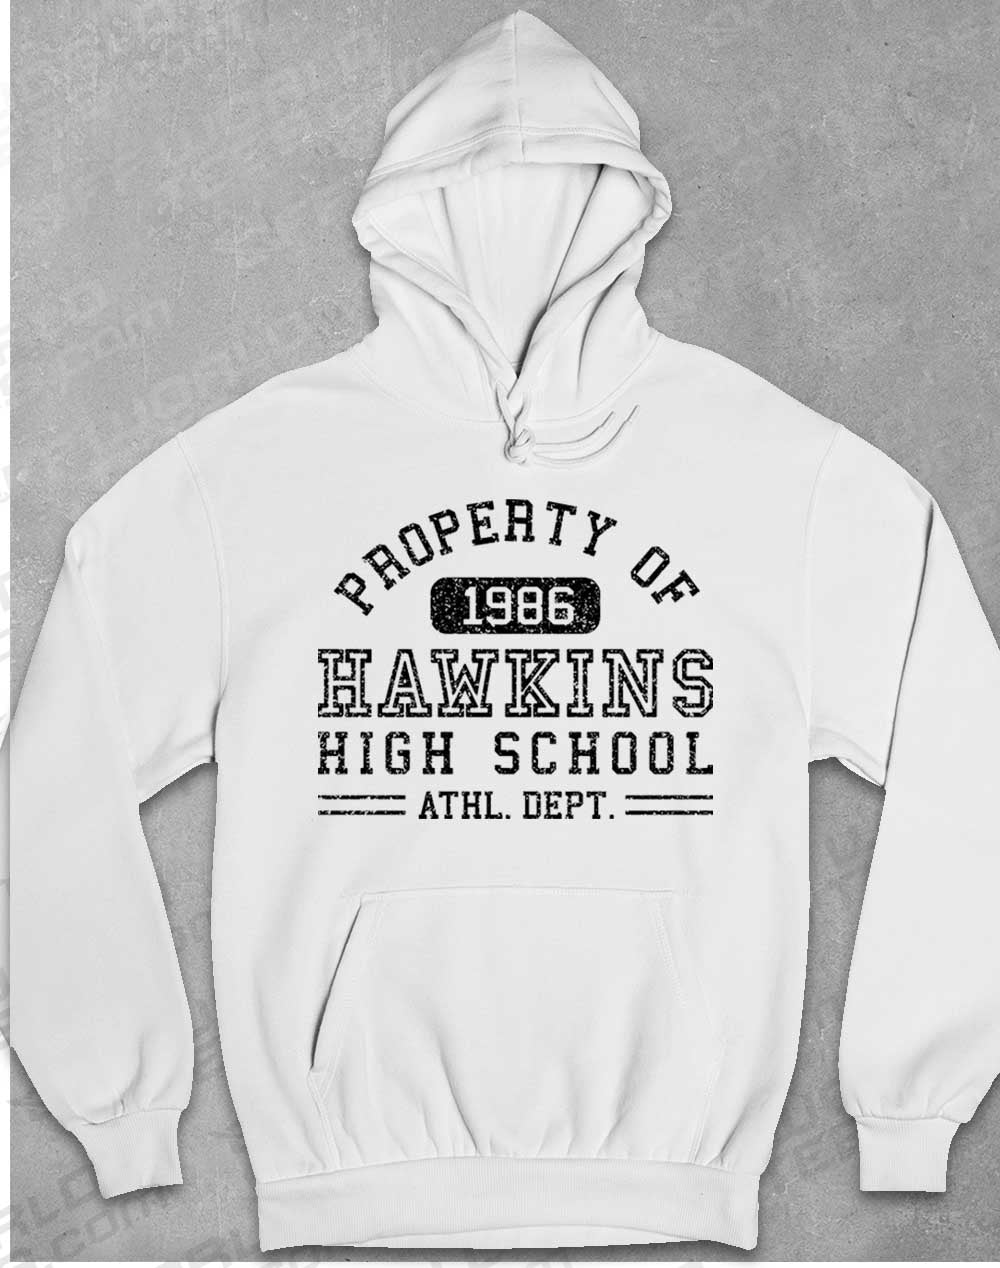 Arctic White - Hawkins High School Athletics 1986 Hoodie